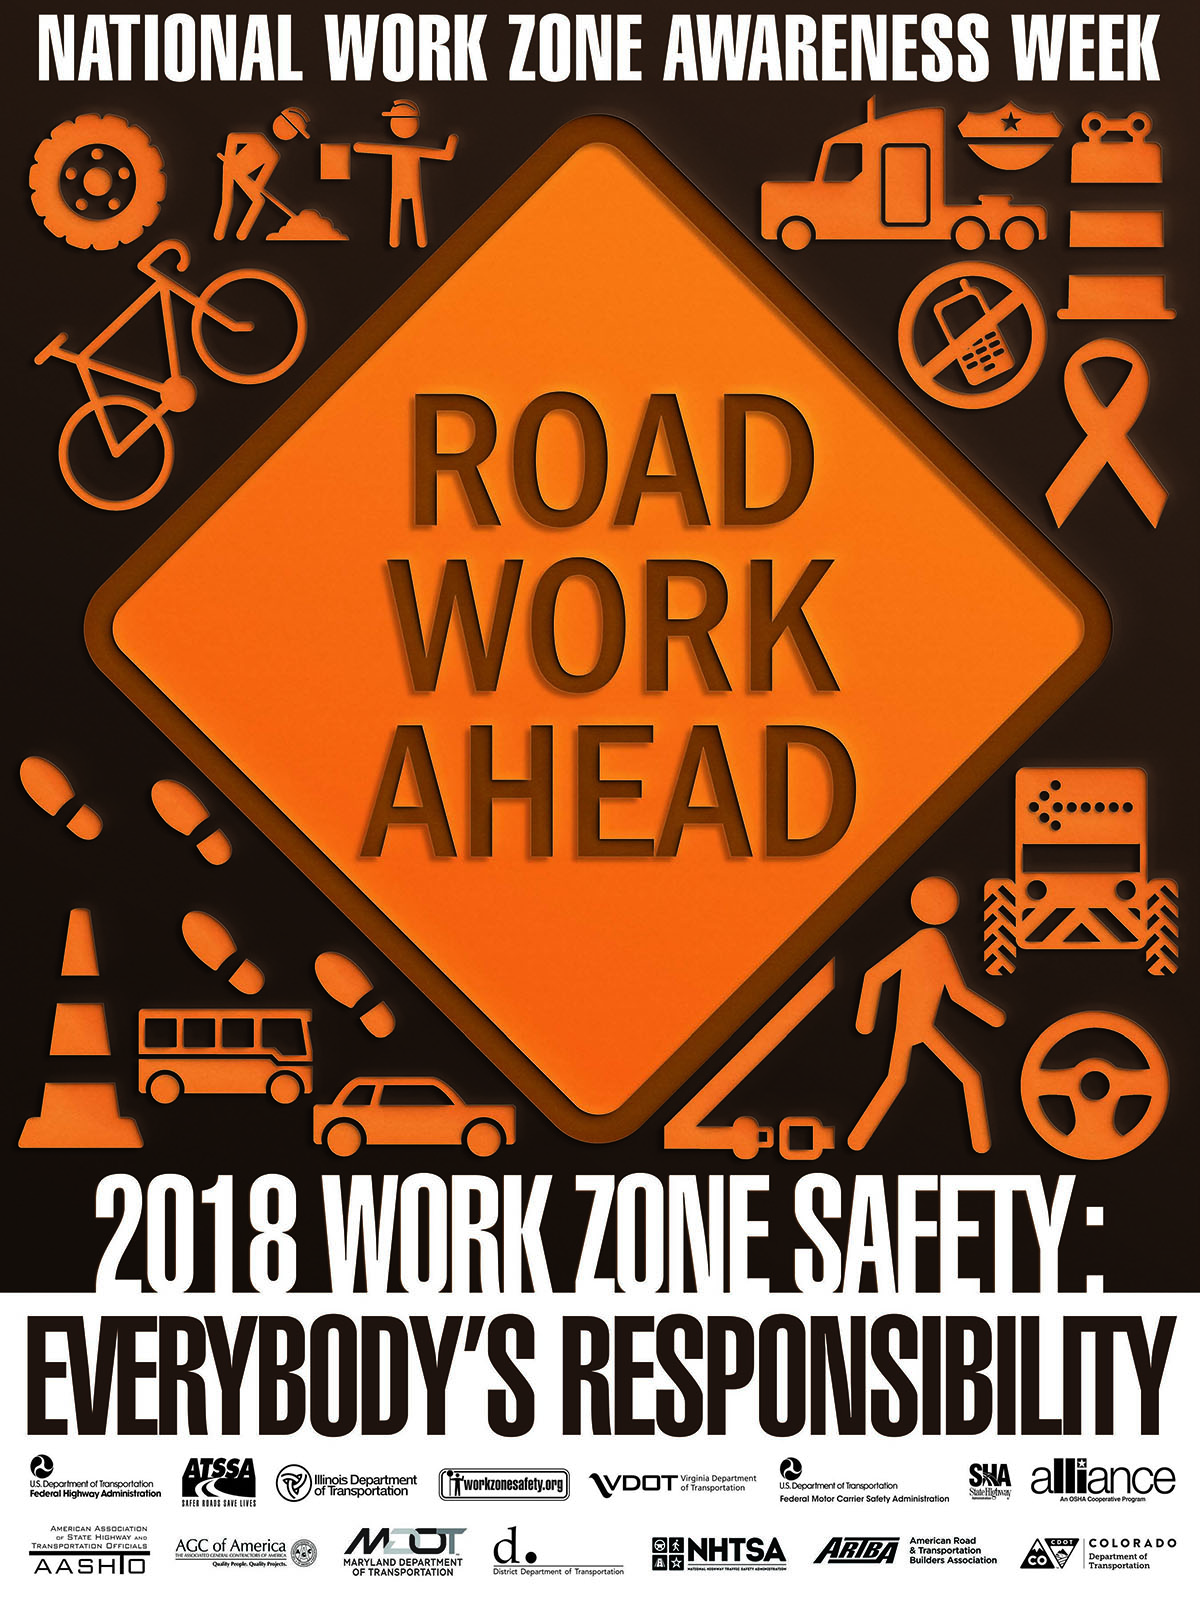 National Work Zone Awareness Poster_w CDOT logo_2018.jpg detail image